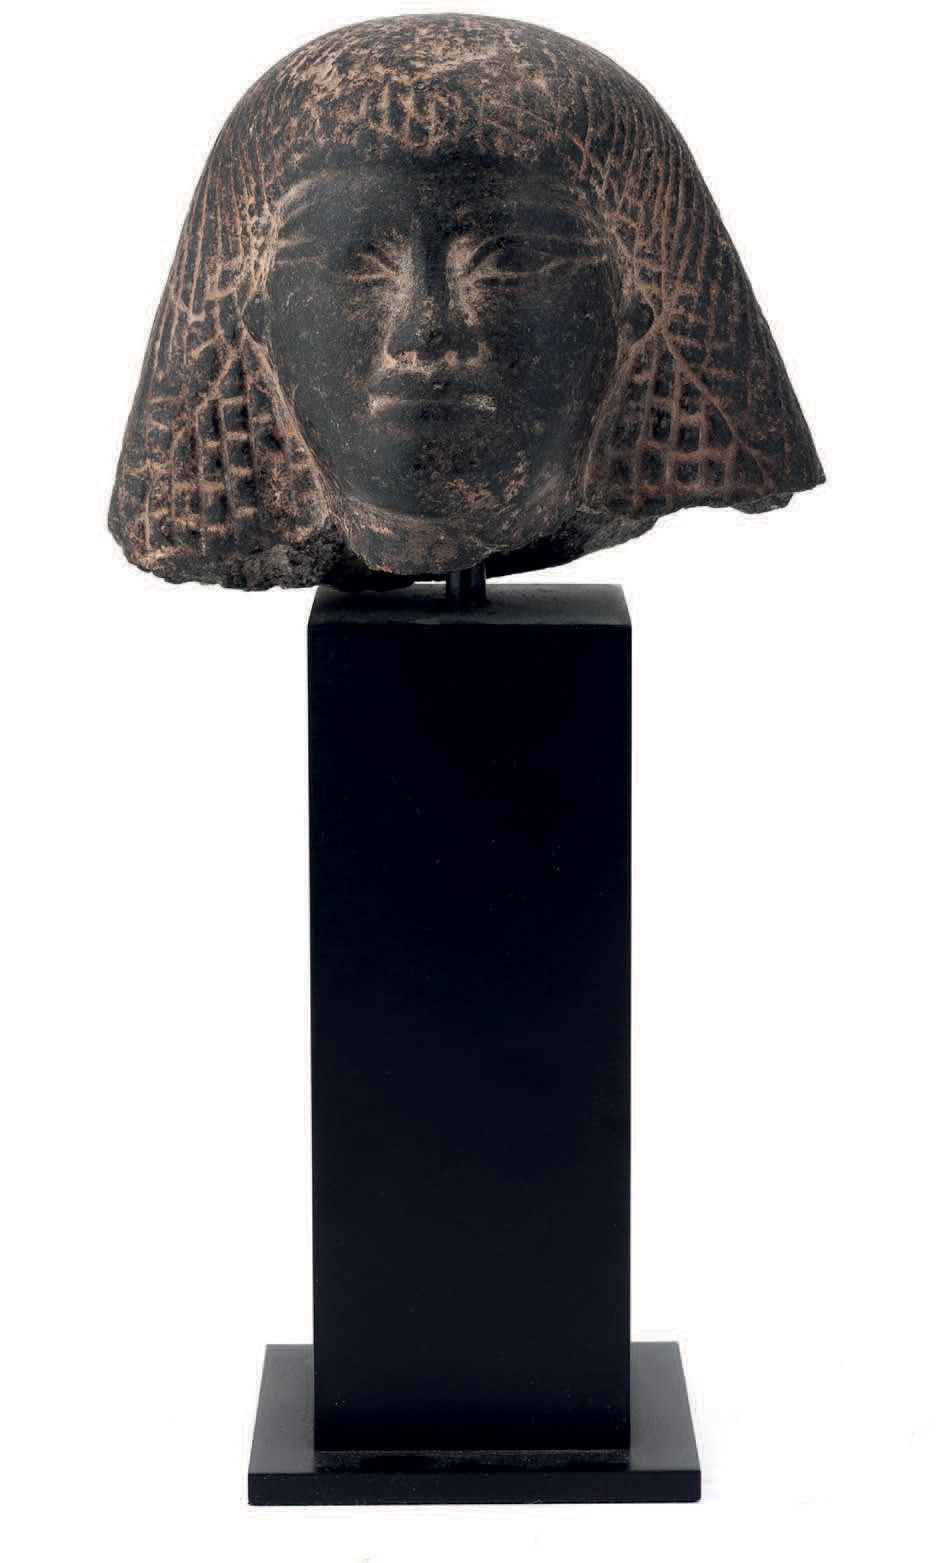 EGYPTE, Nouvel Empire (1552- 1070 av. J.-C.) Tête d'homme provenant d'une statue&hellip;